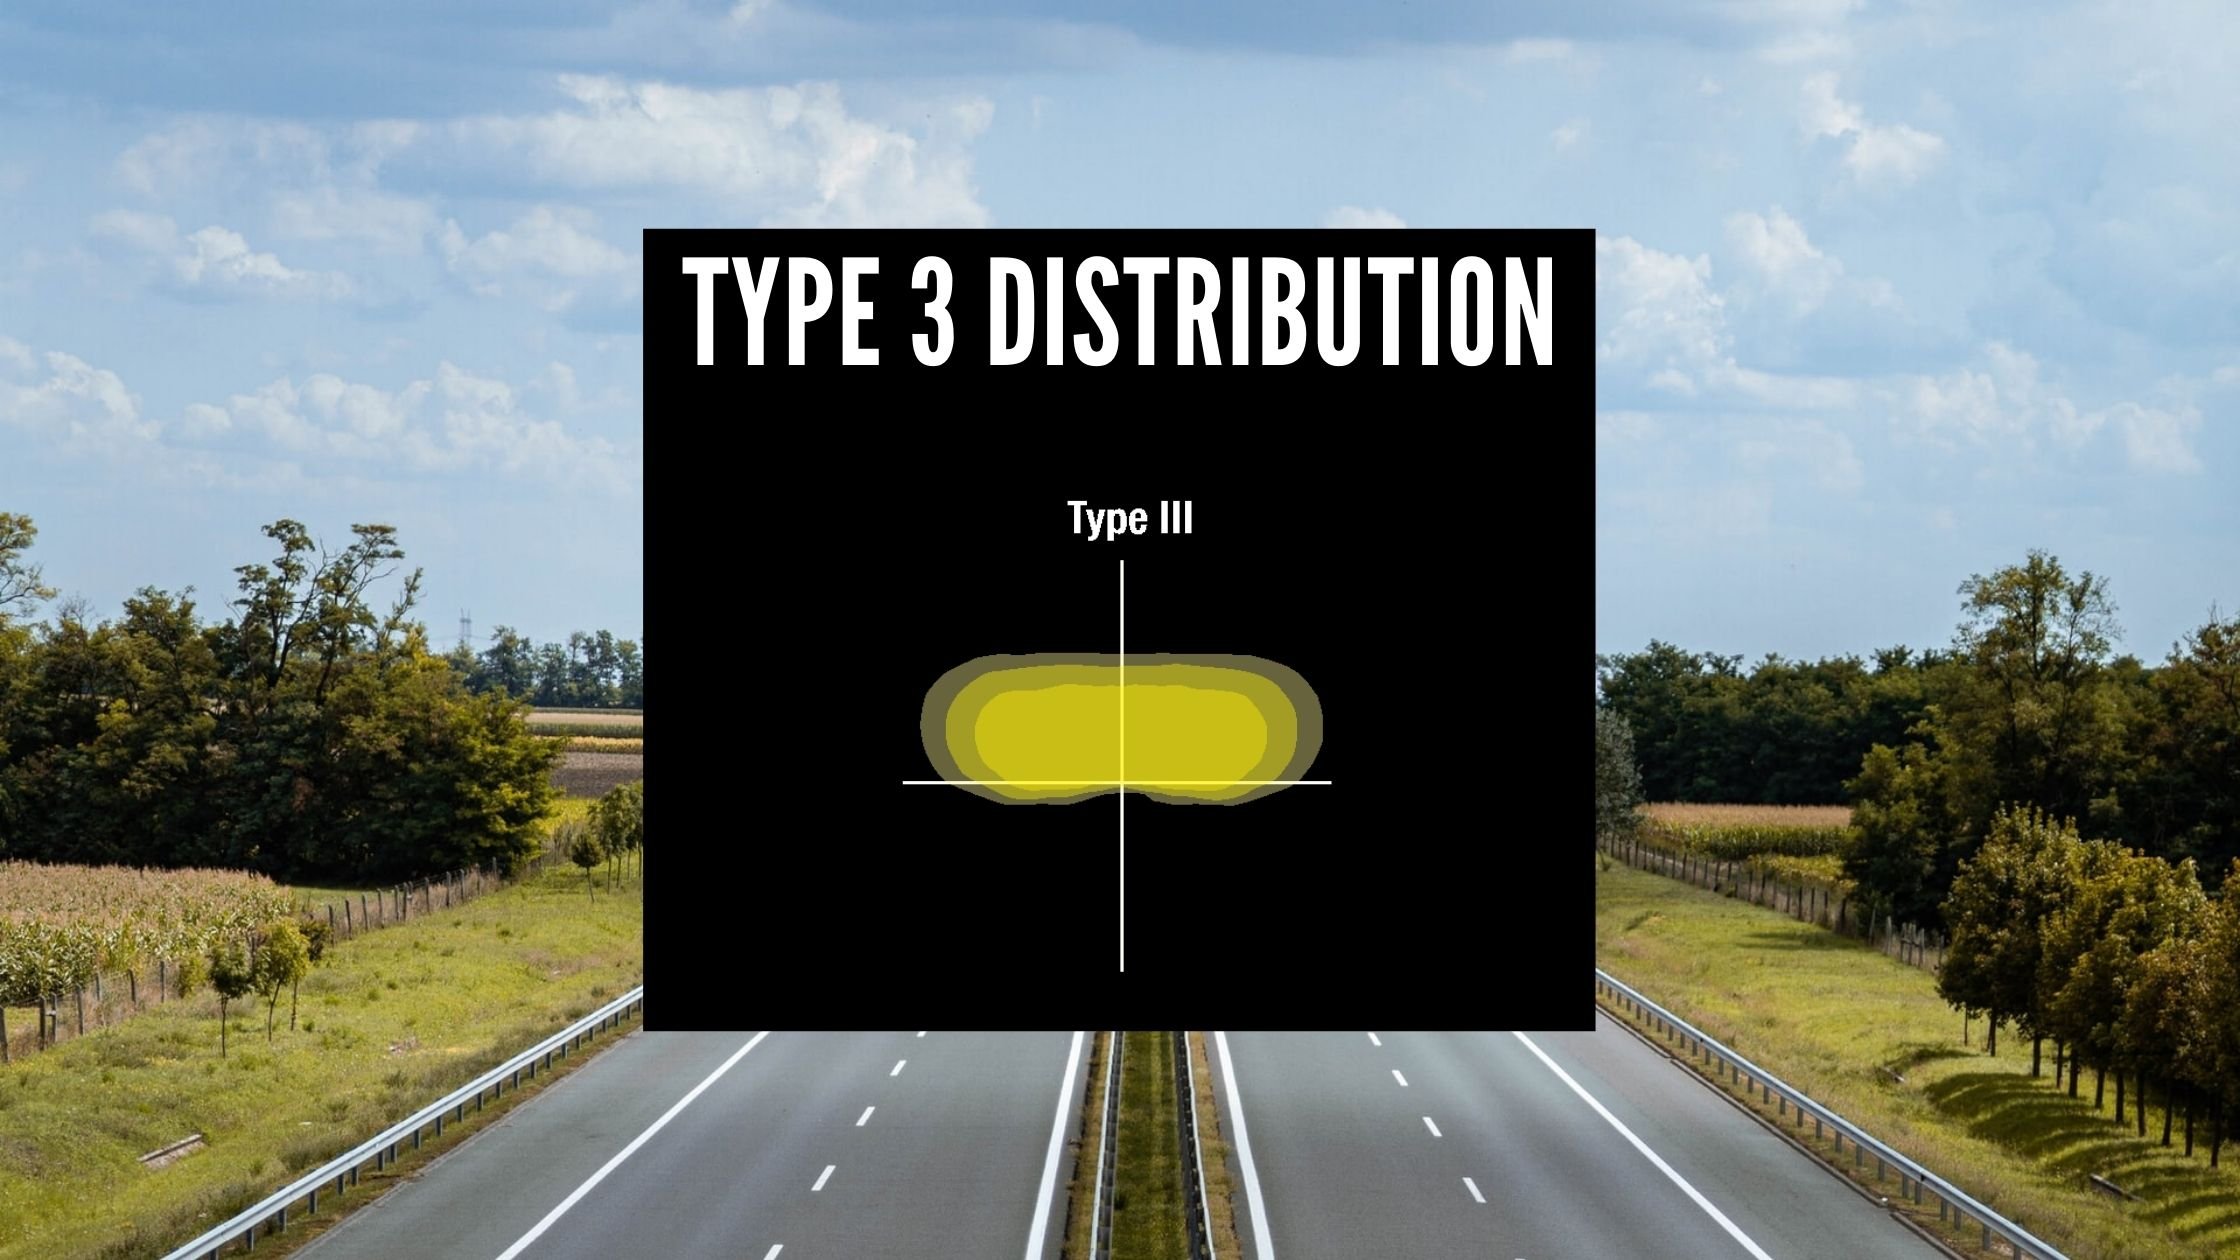 Type 3 Distribution